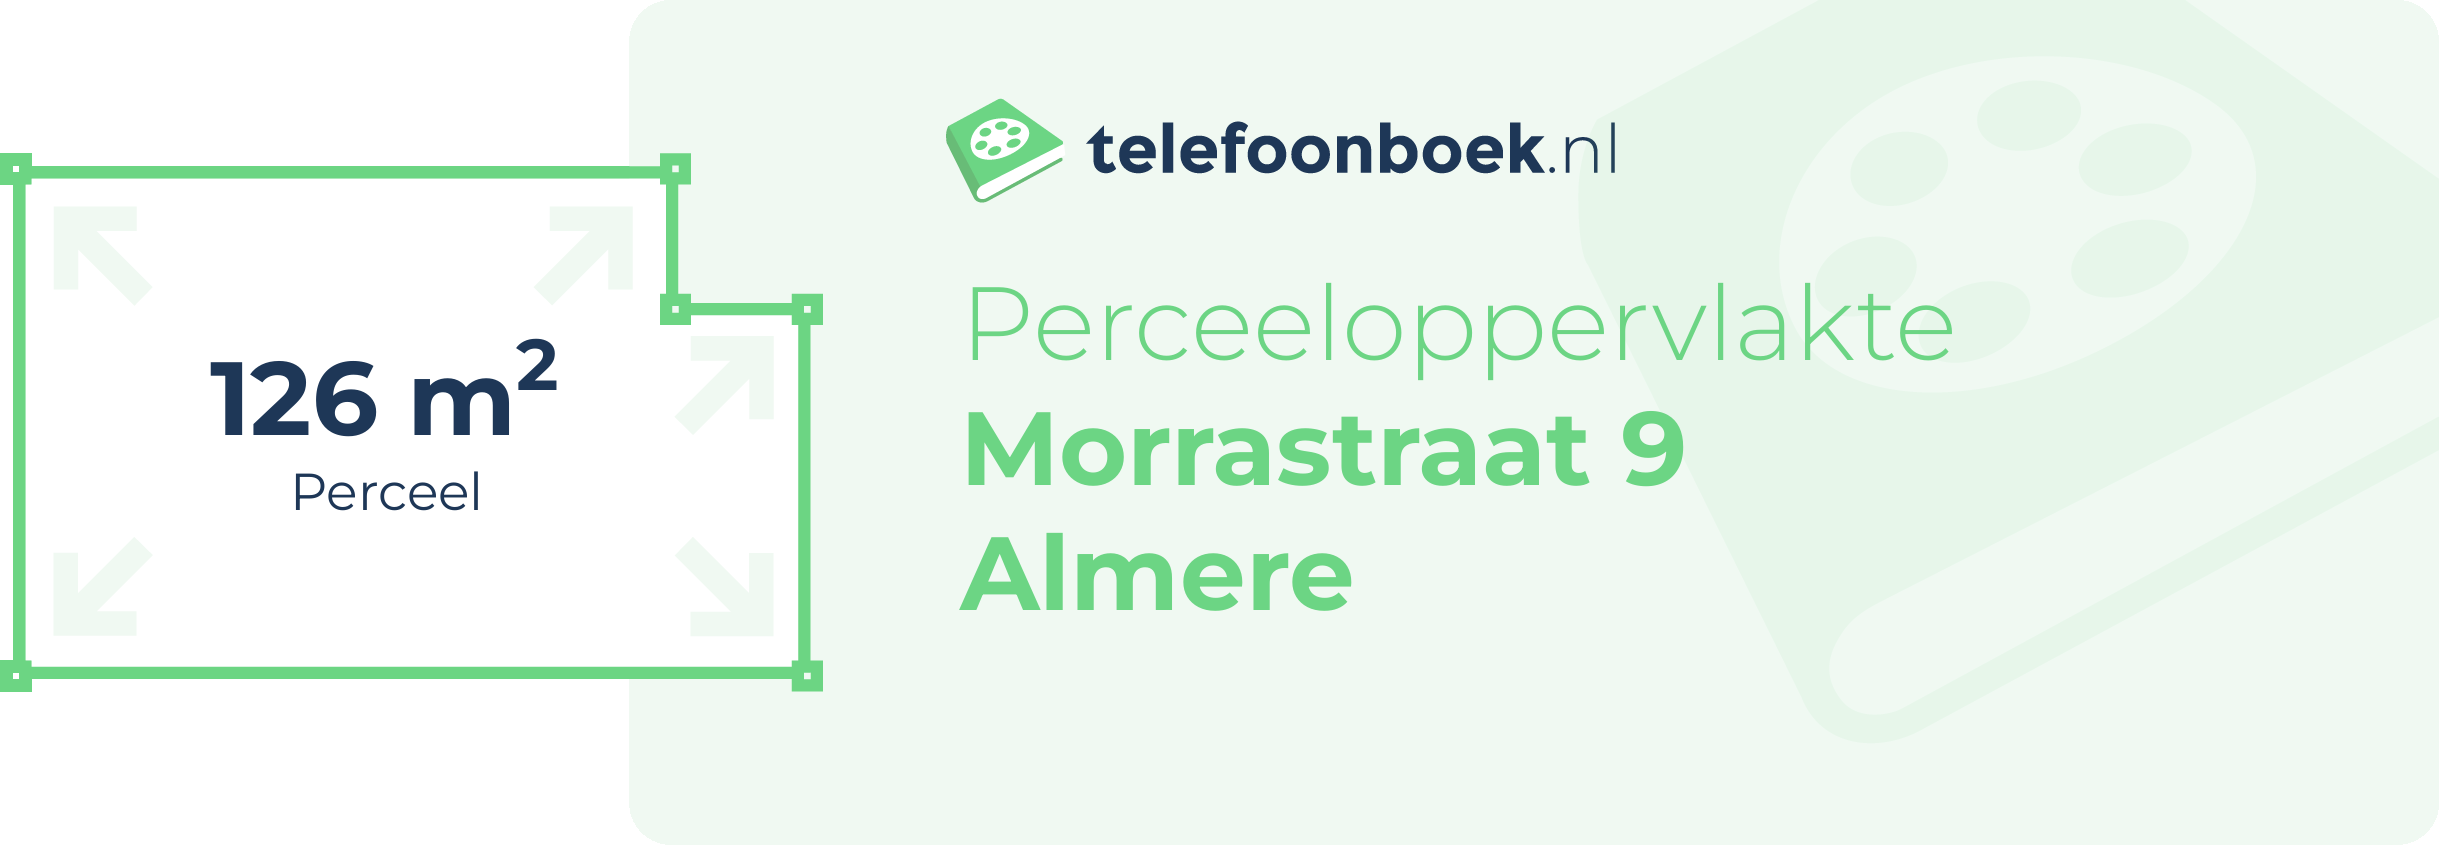 Perceeloppervlakte Morrastraat 9 Almere